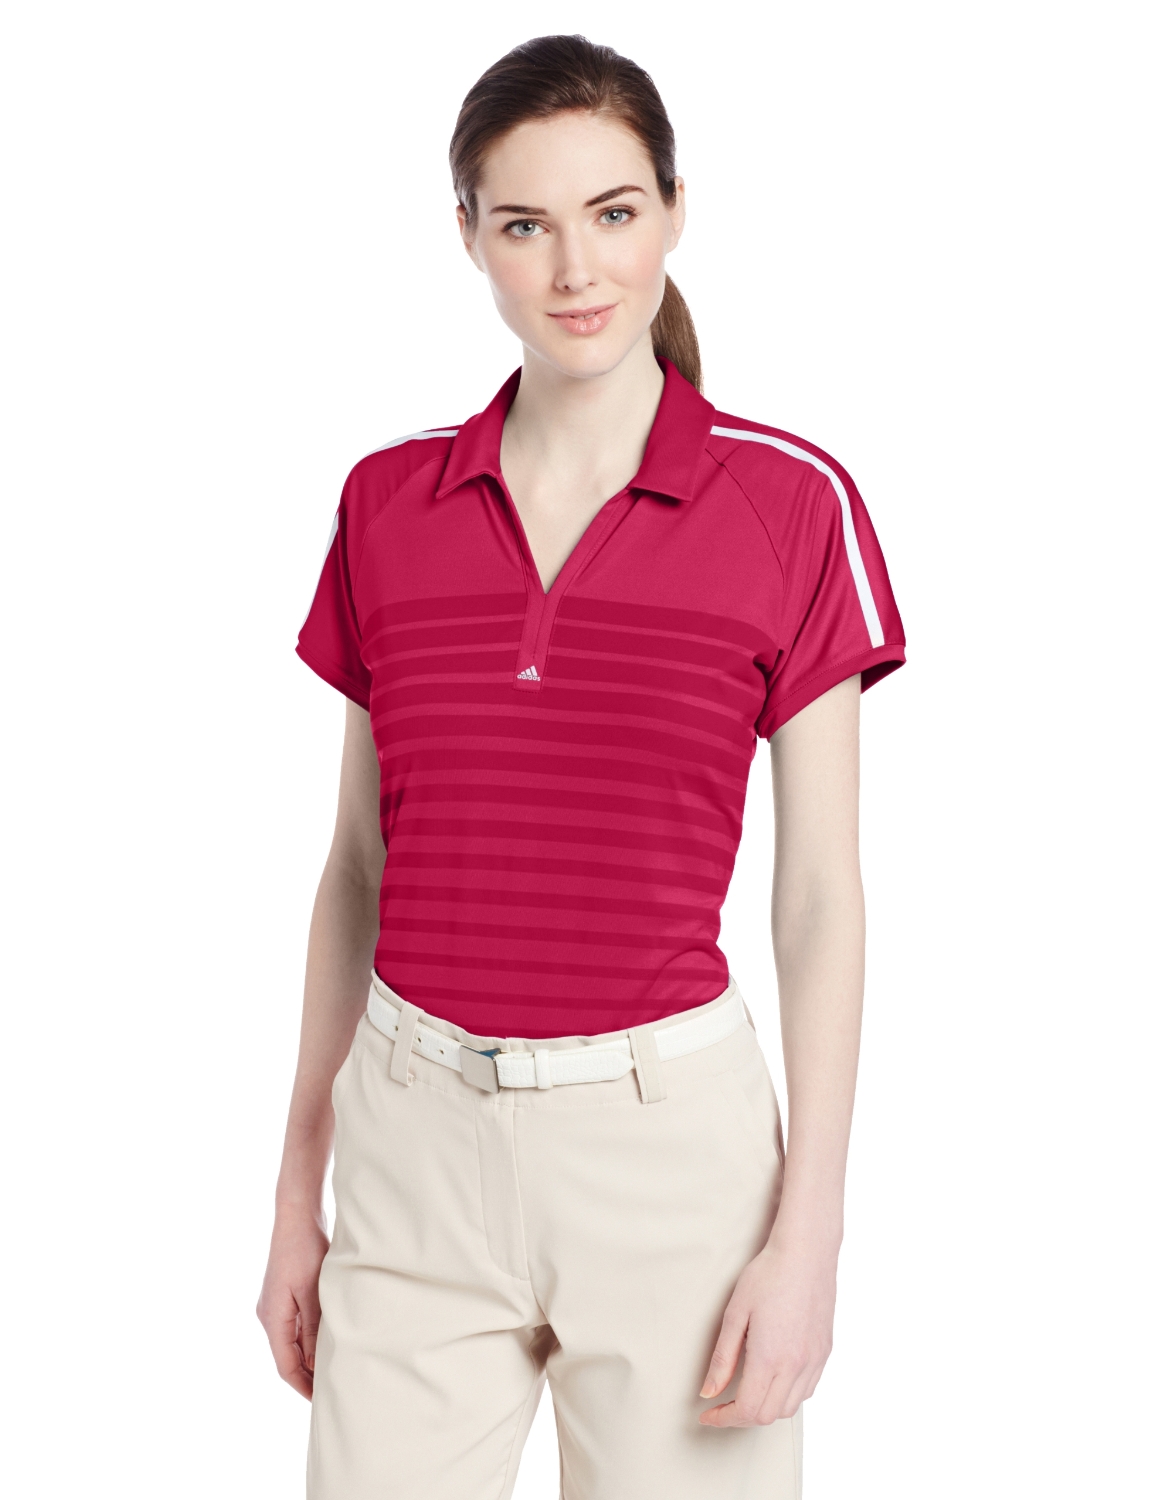 Womens Adidas Puremotion Tour Climacool Golf Polo Shirts